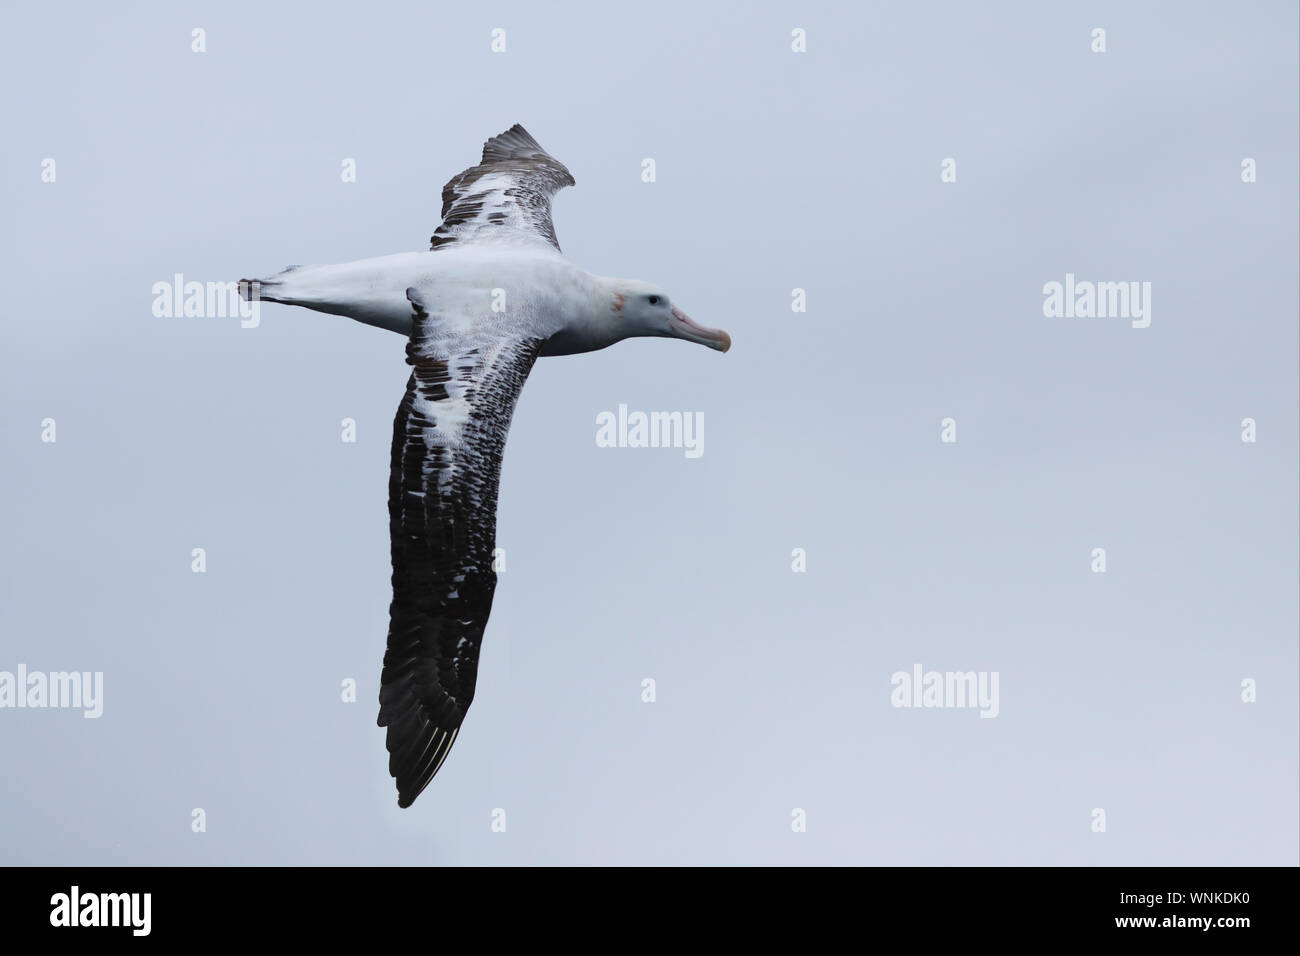 Une Gibson, albatros Diomedea exulans, vol libre Banque D'Images